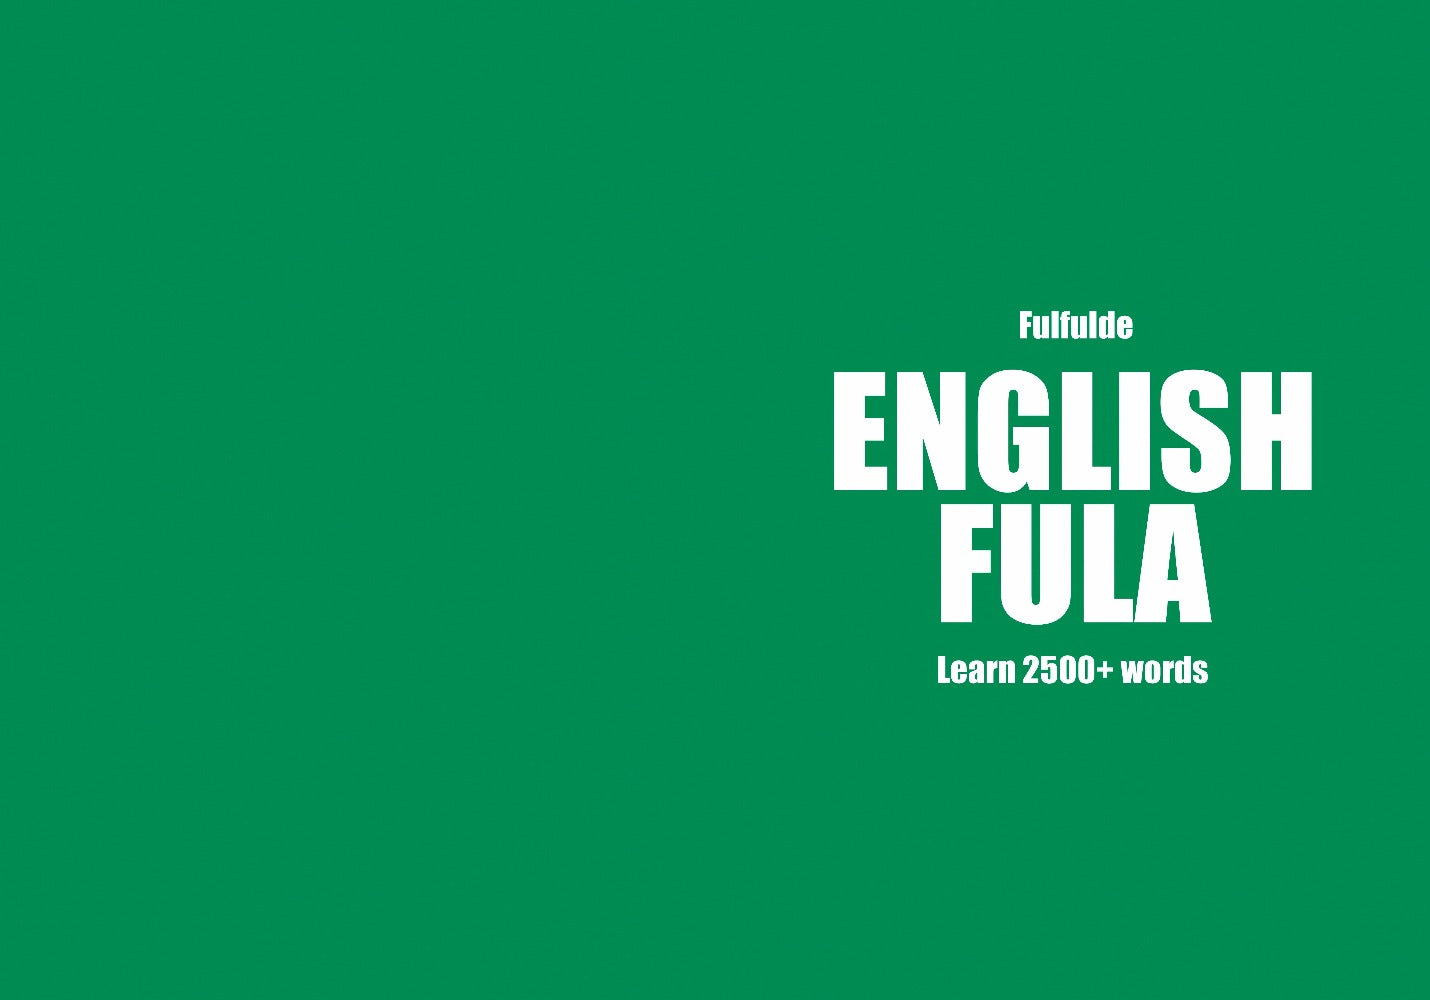 Fula language learning notebook cover